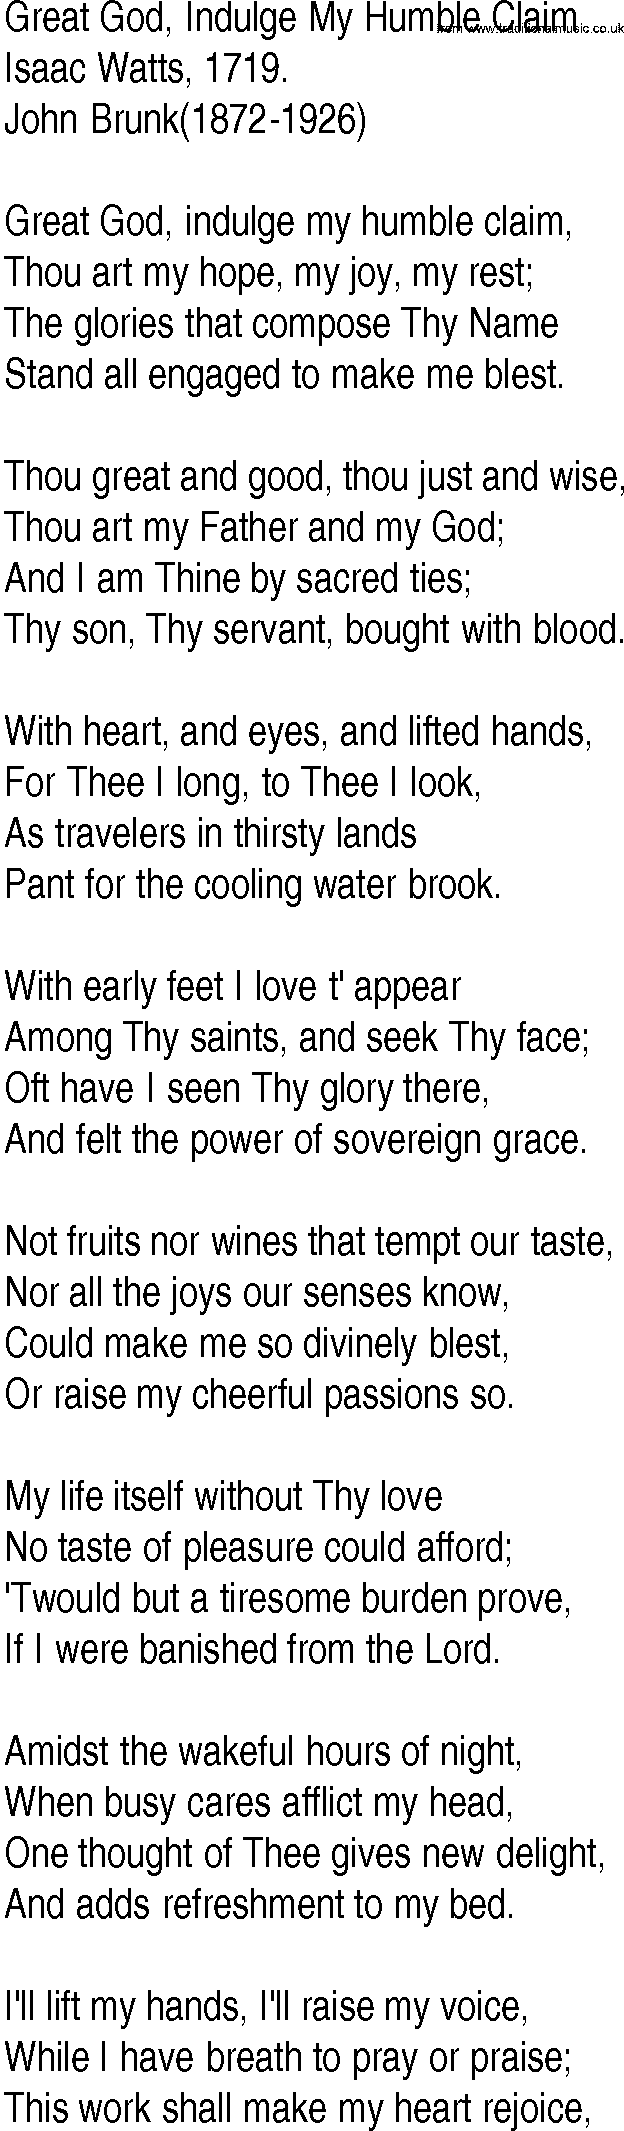 Hymn and Gospel Song: Great God, Indulge My Humble Claim by Isaac Watts lyrics